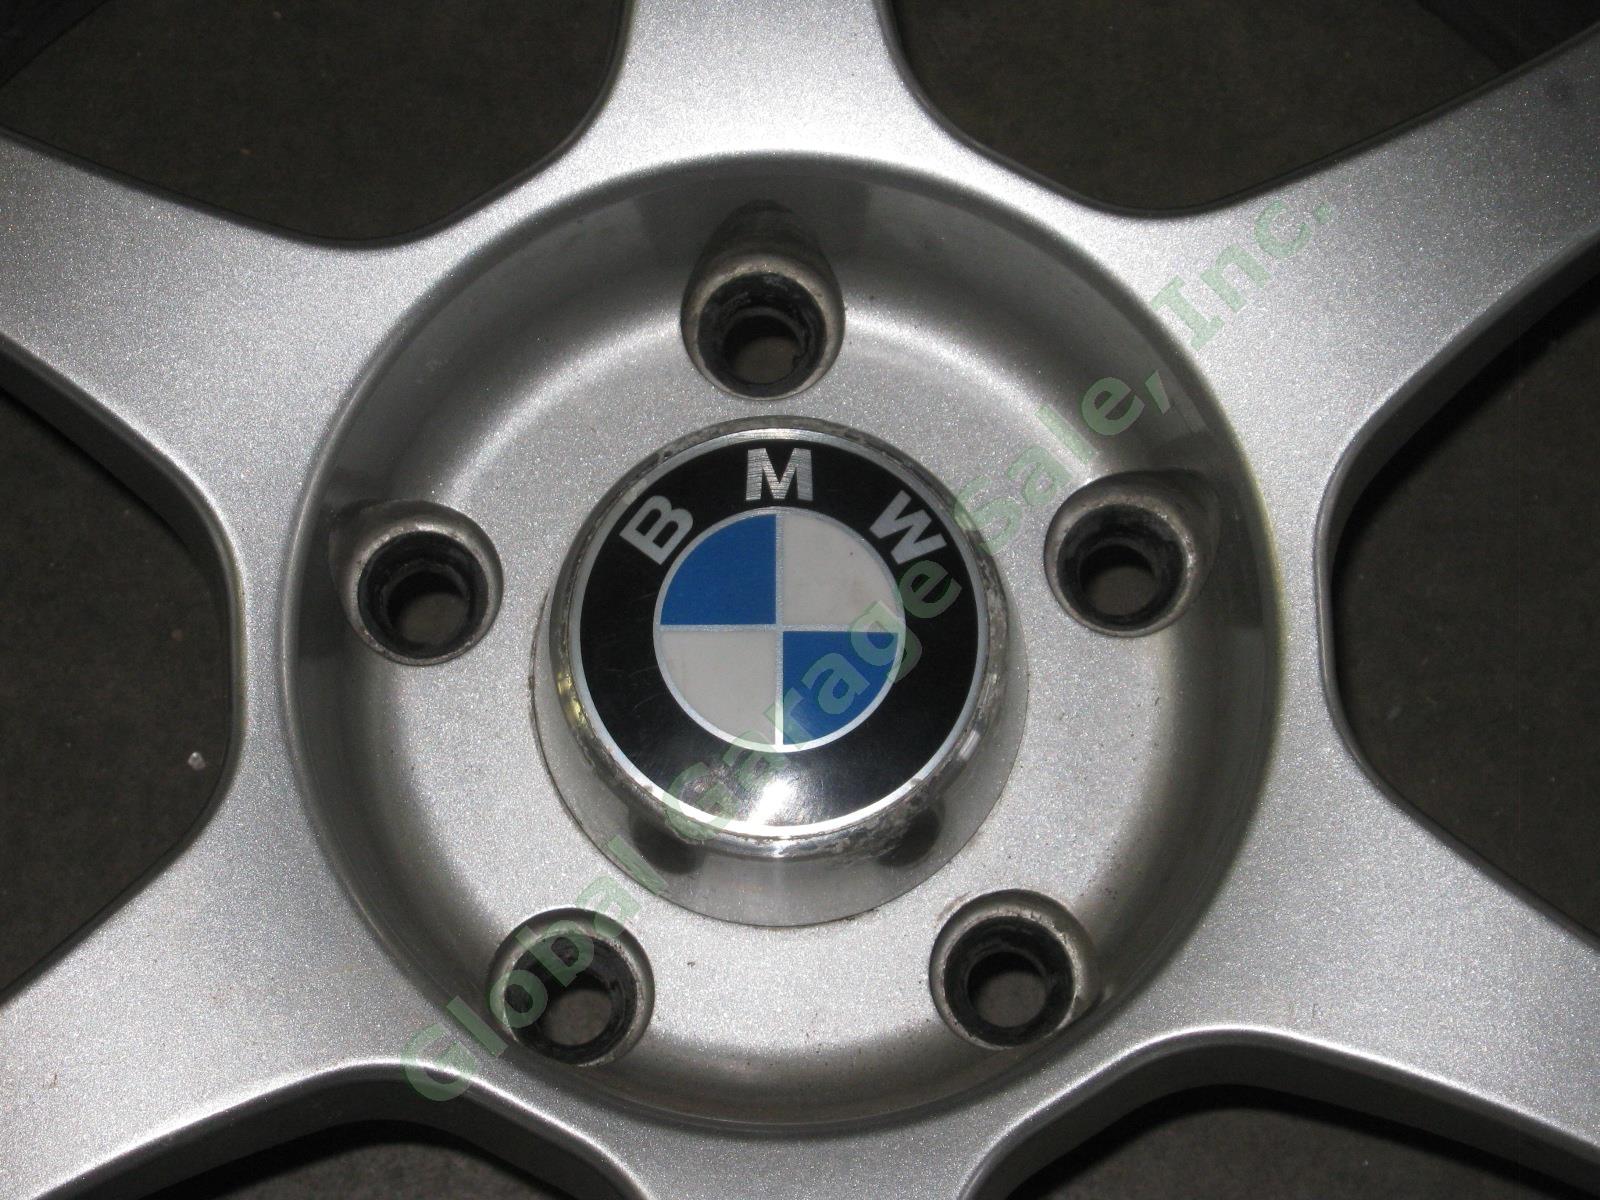 4 Speed Star BMW M3 SSR Type C 17x8.5 5x100 Aluminum Alloy Wheels Rims Set Lot 1